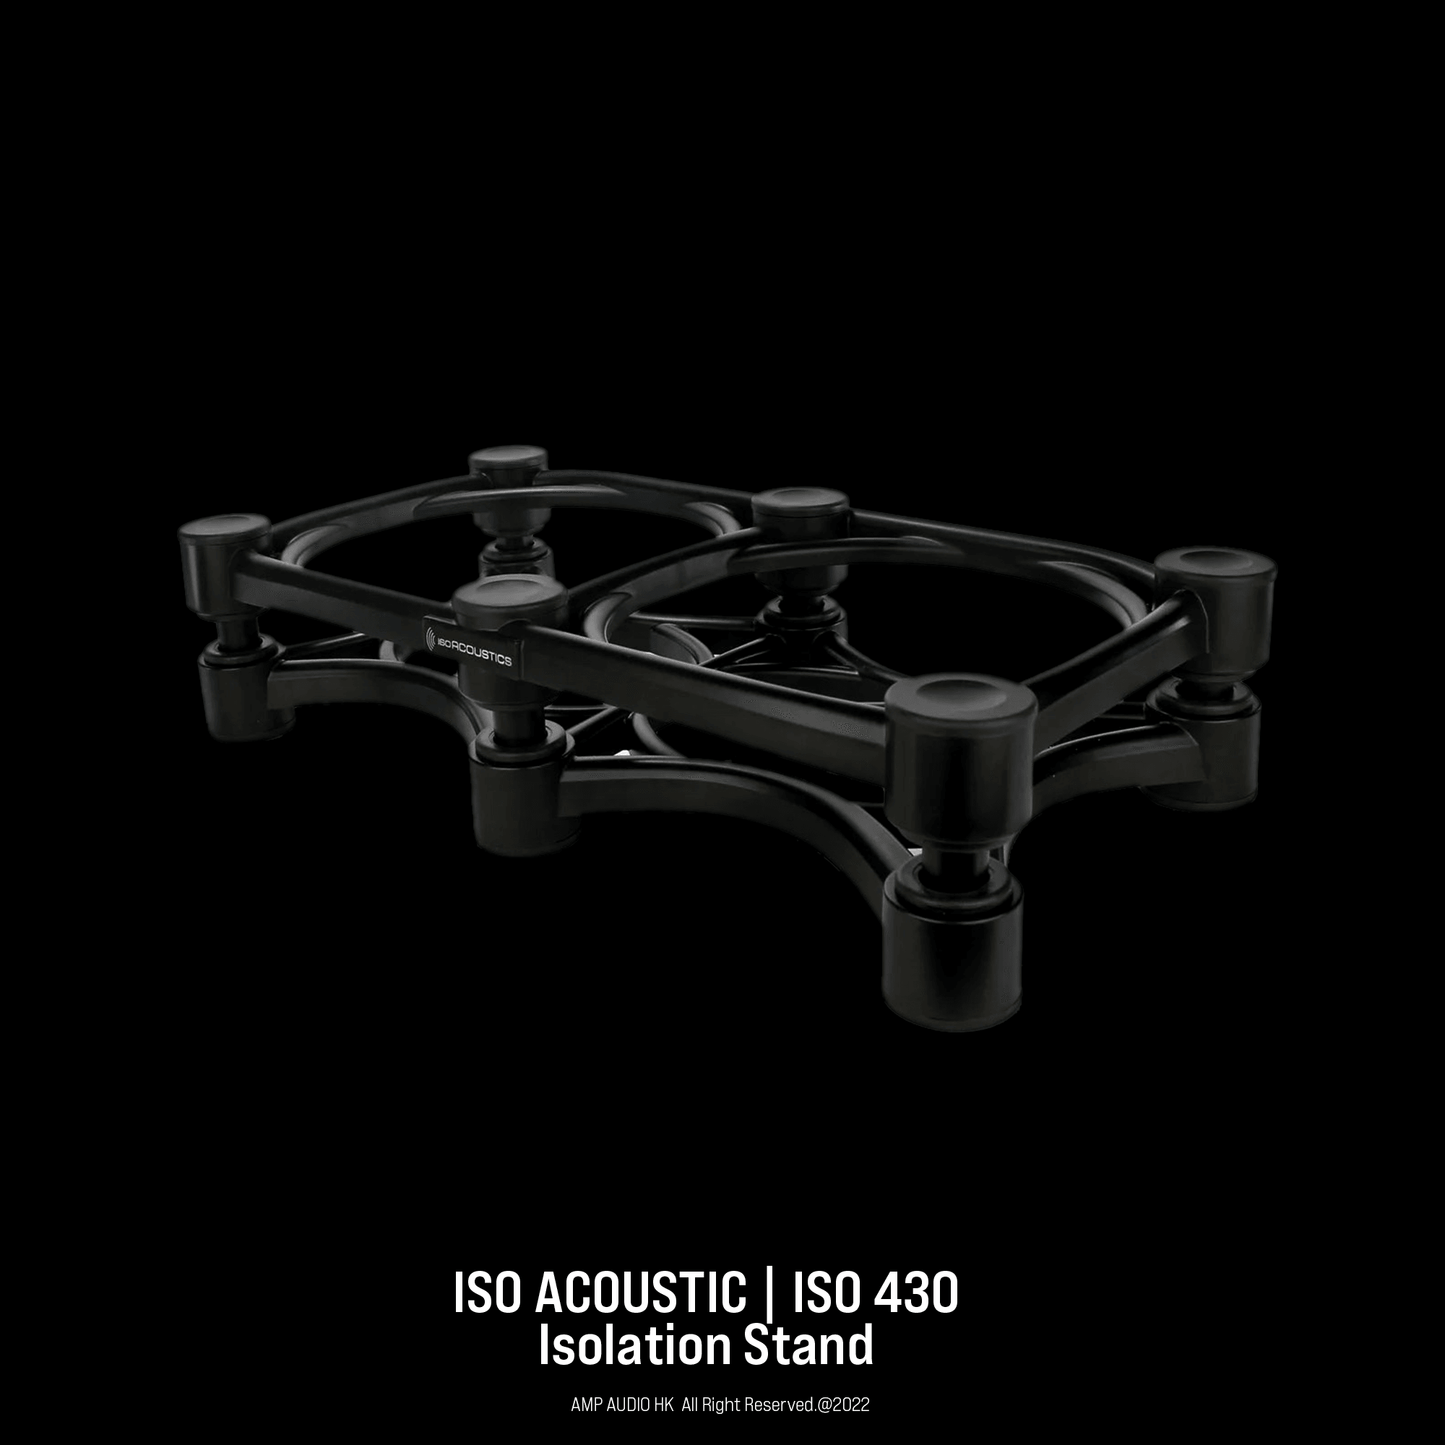 Iso Acoustic | ISO 430 - AMP AUDIO